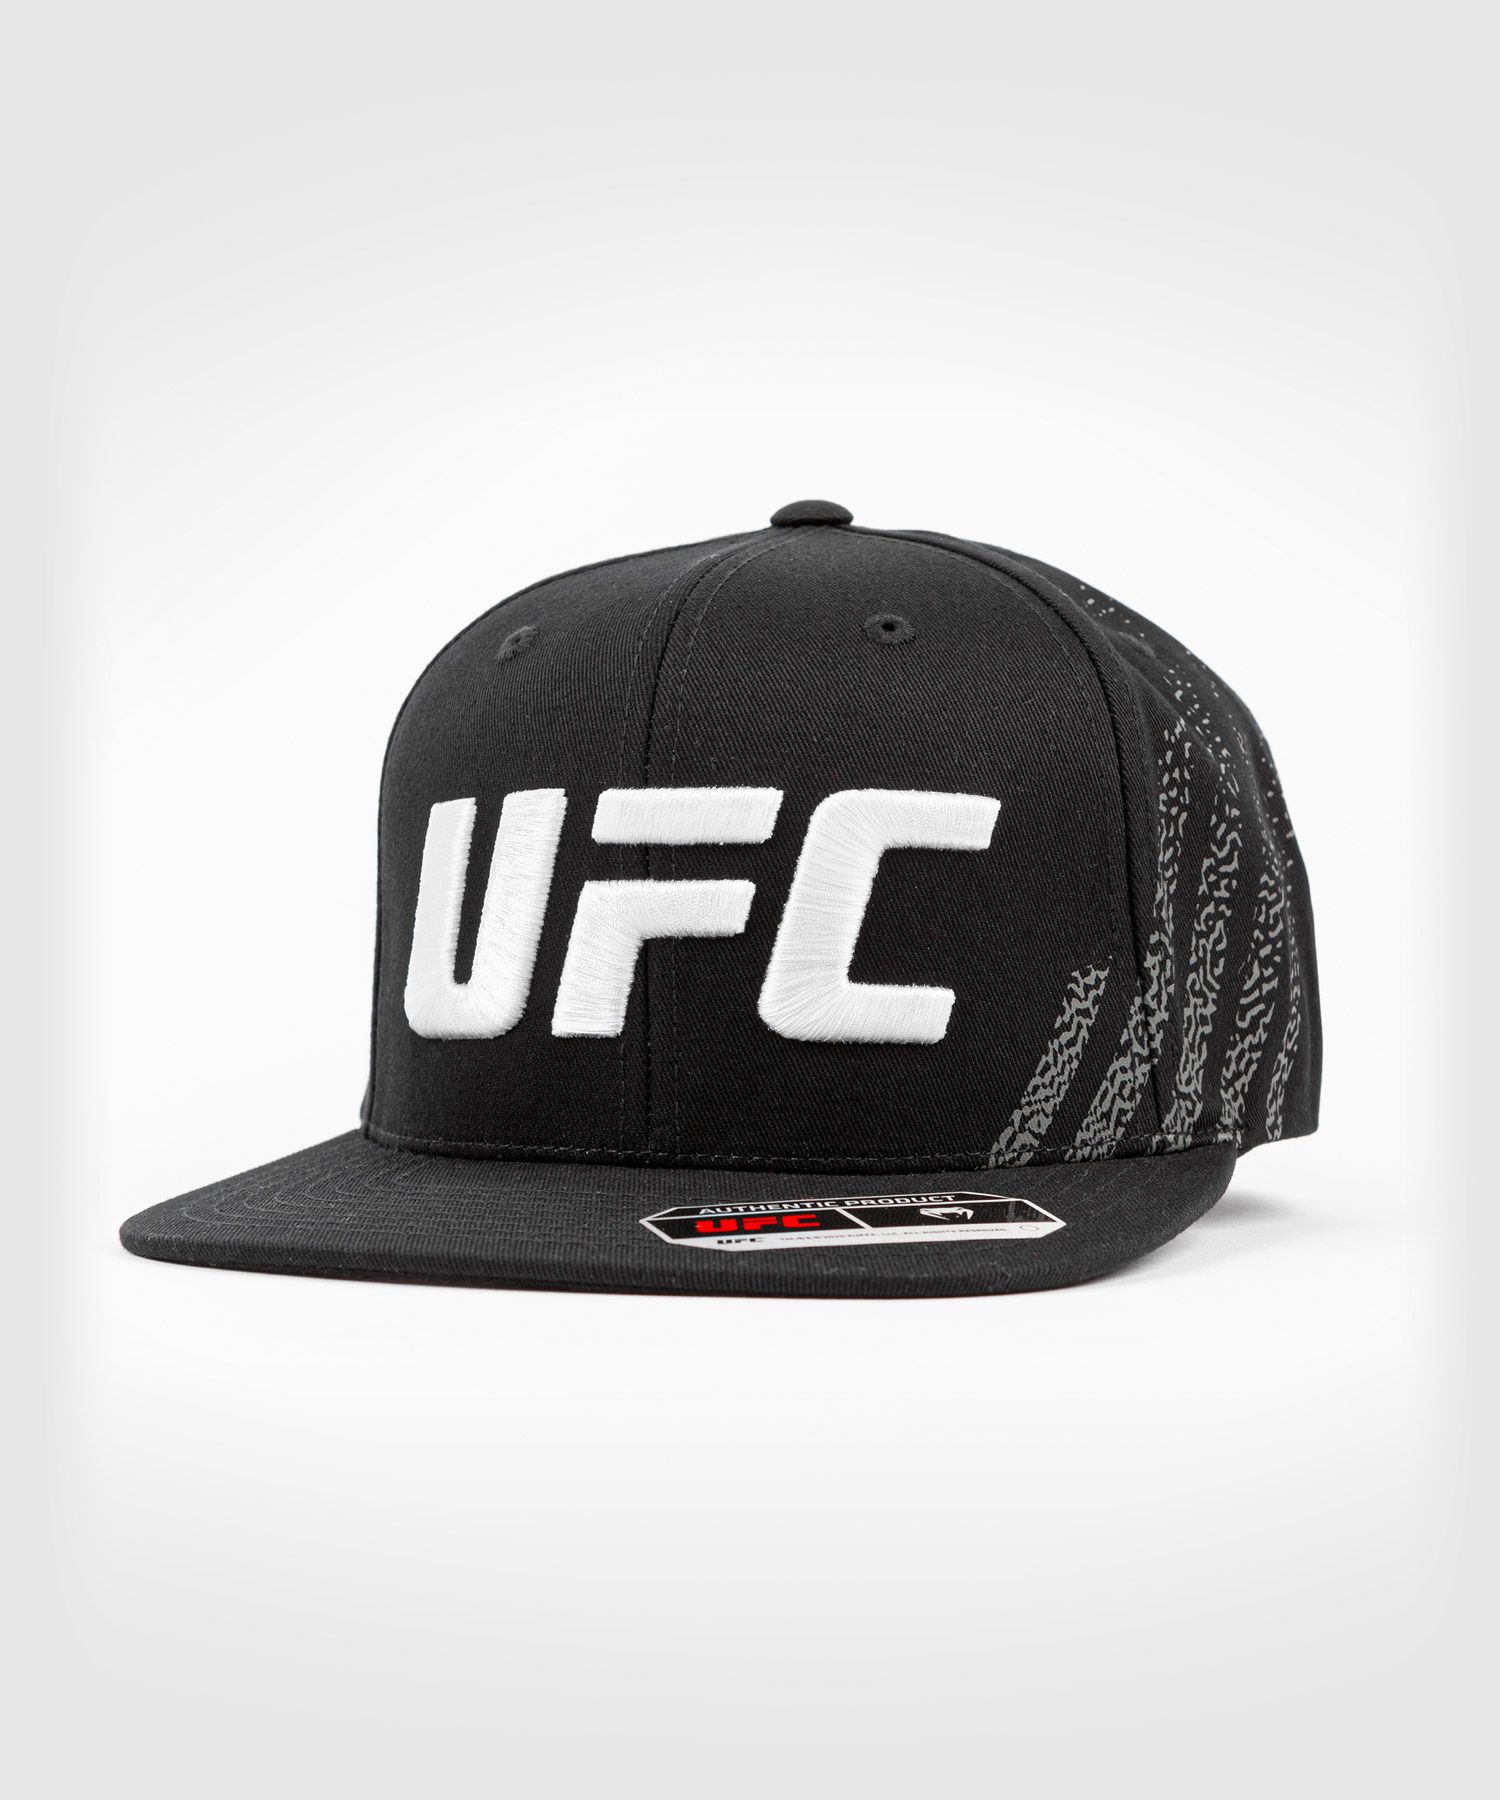 UFC Venum Authentic Fight Night Unisex Walkout Hat - Black